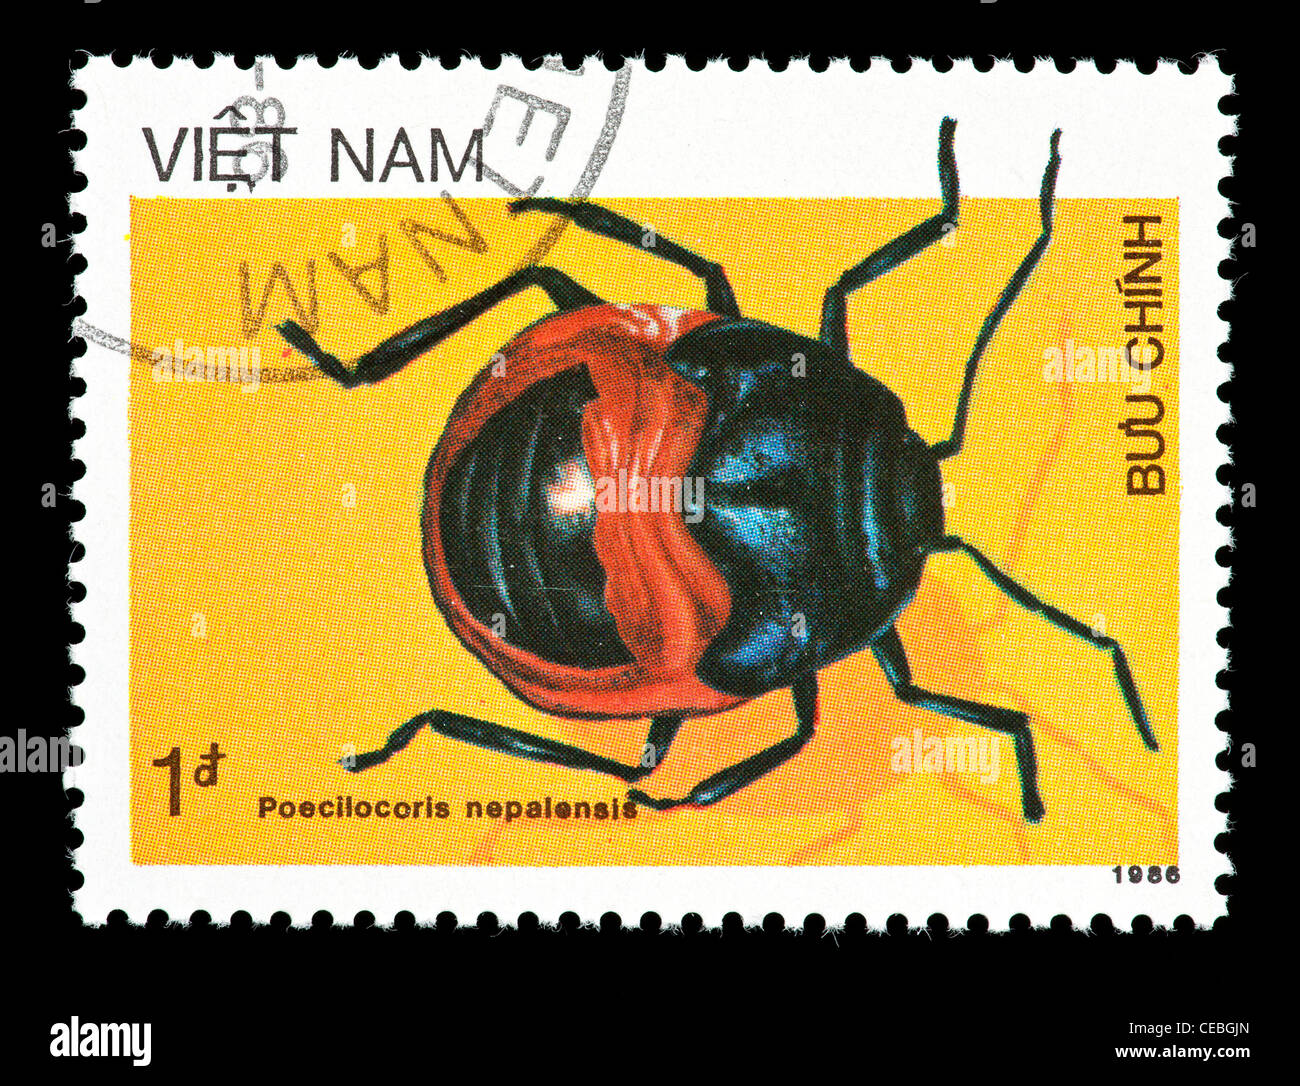 Postage stamp from Vietnam depicting a true bug (Poecilocoris nepalensis) Stock Photo